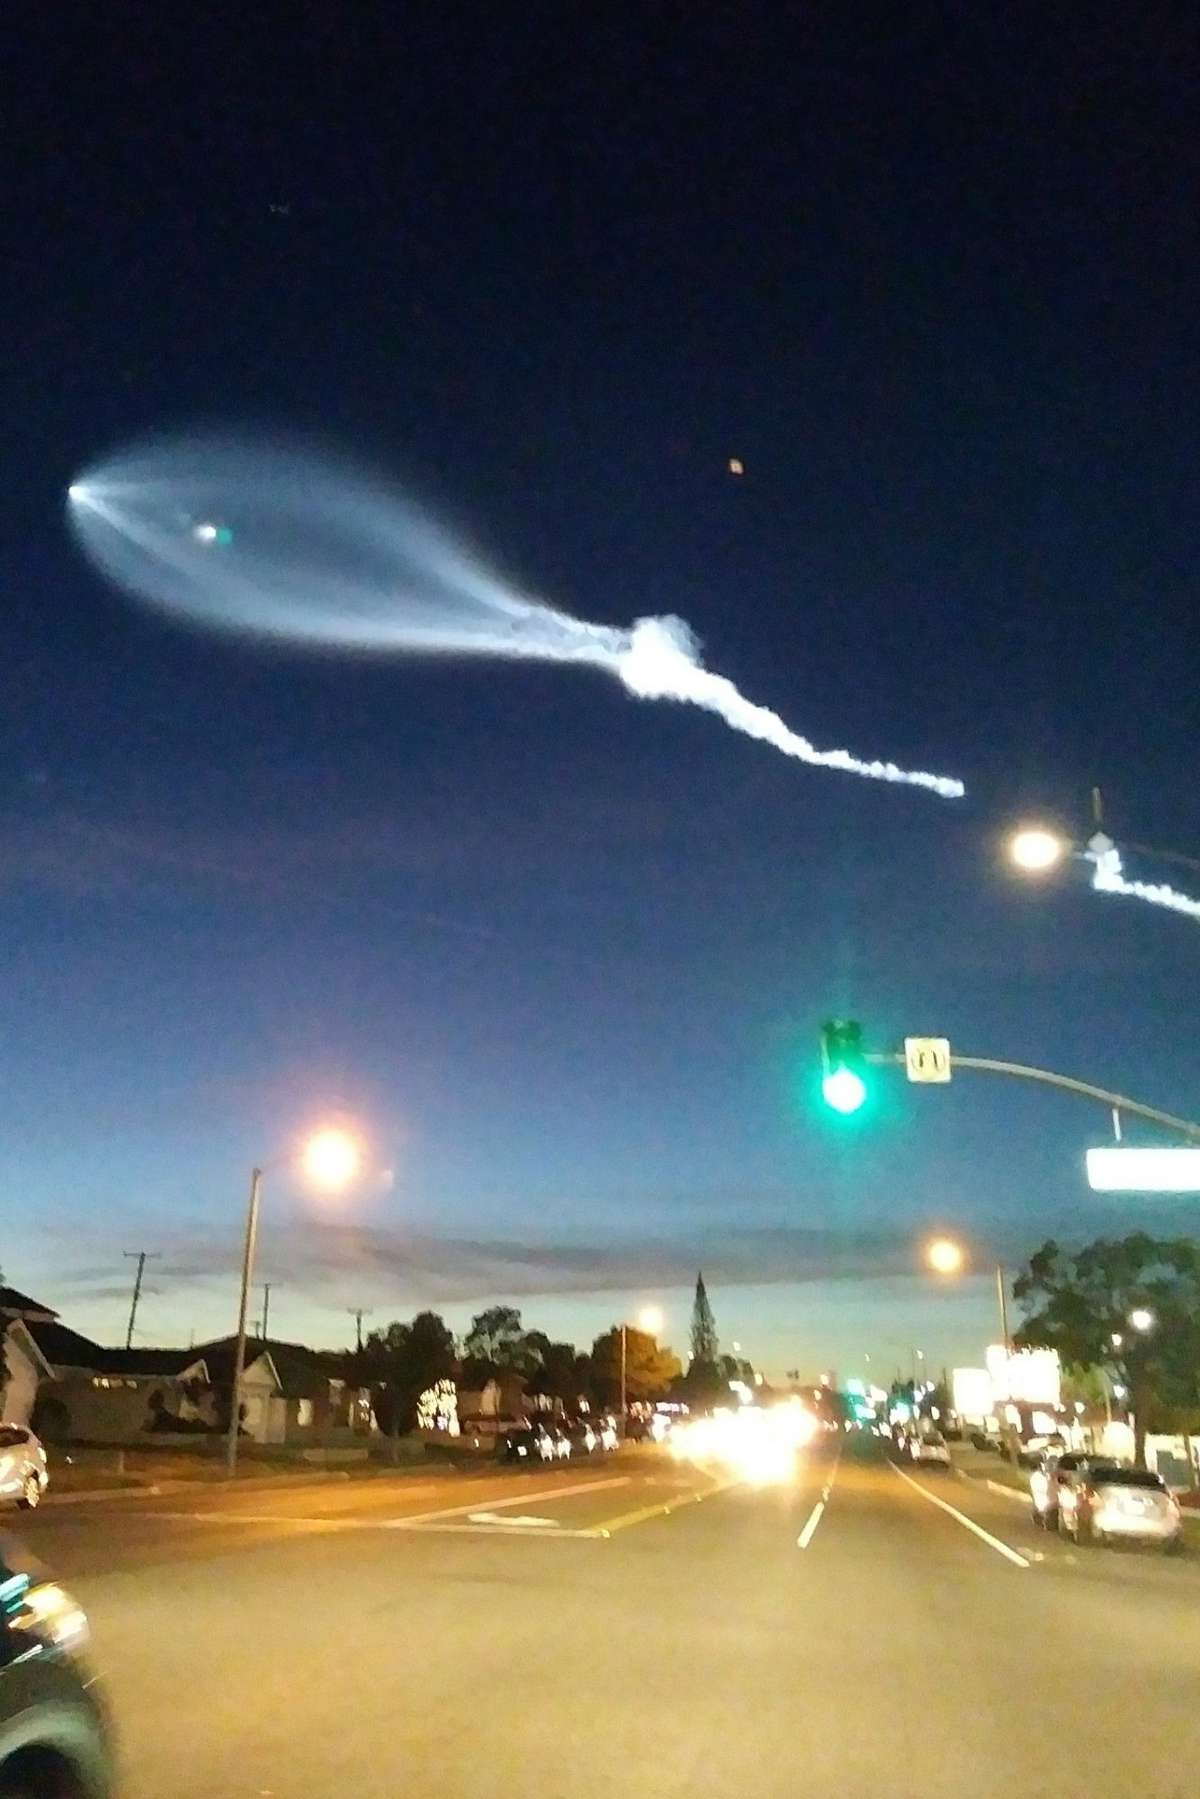 Elon Musk SpaceX rocket